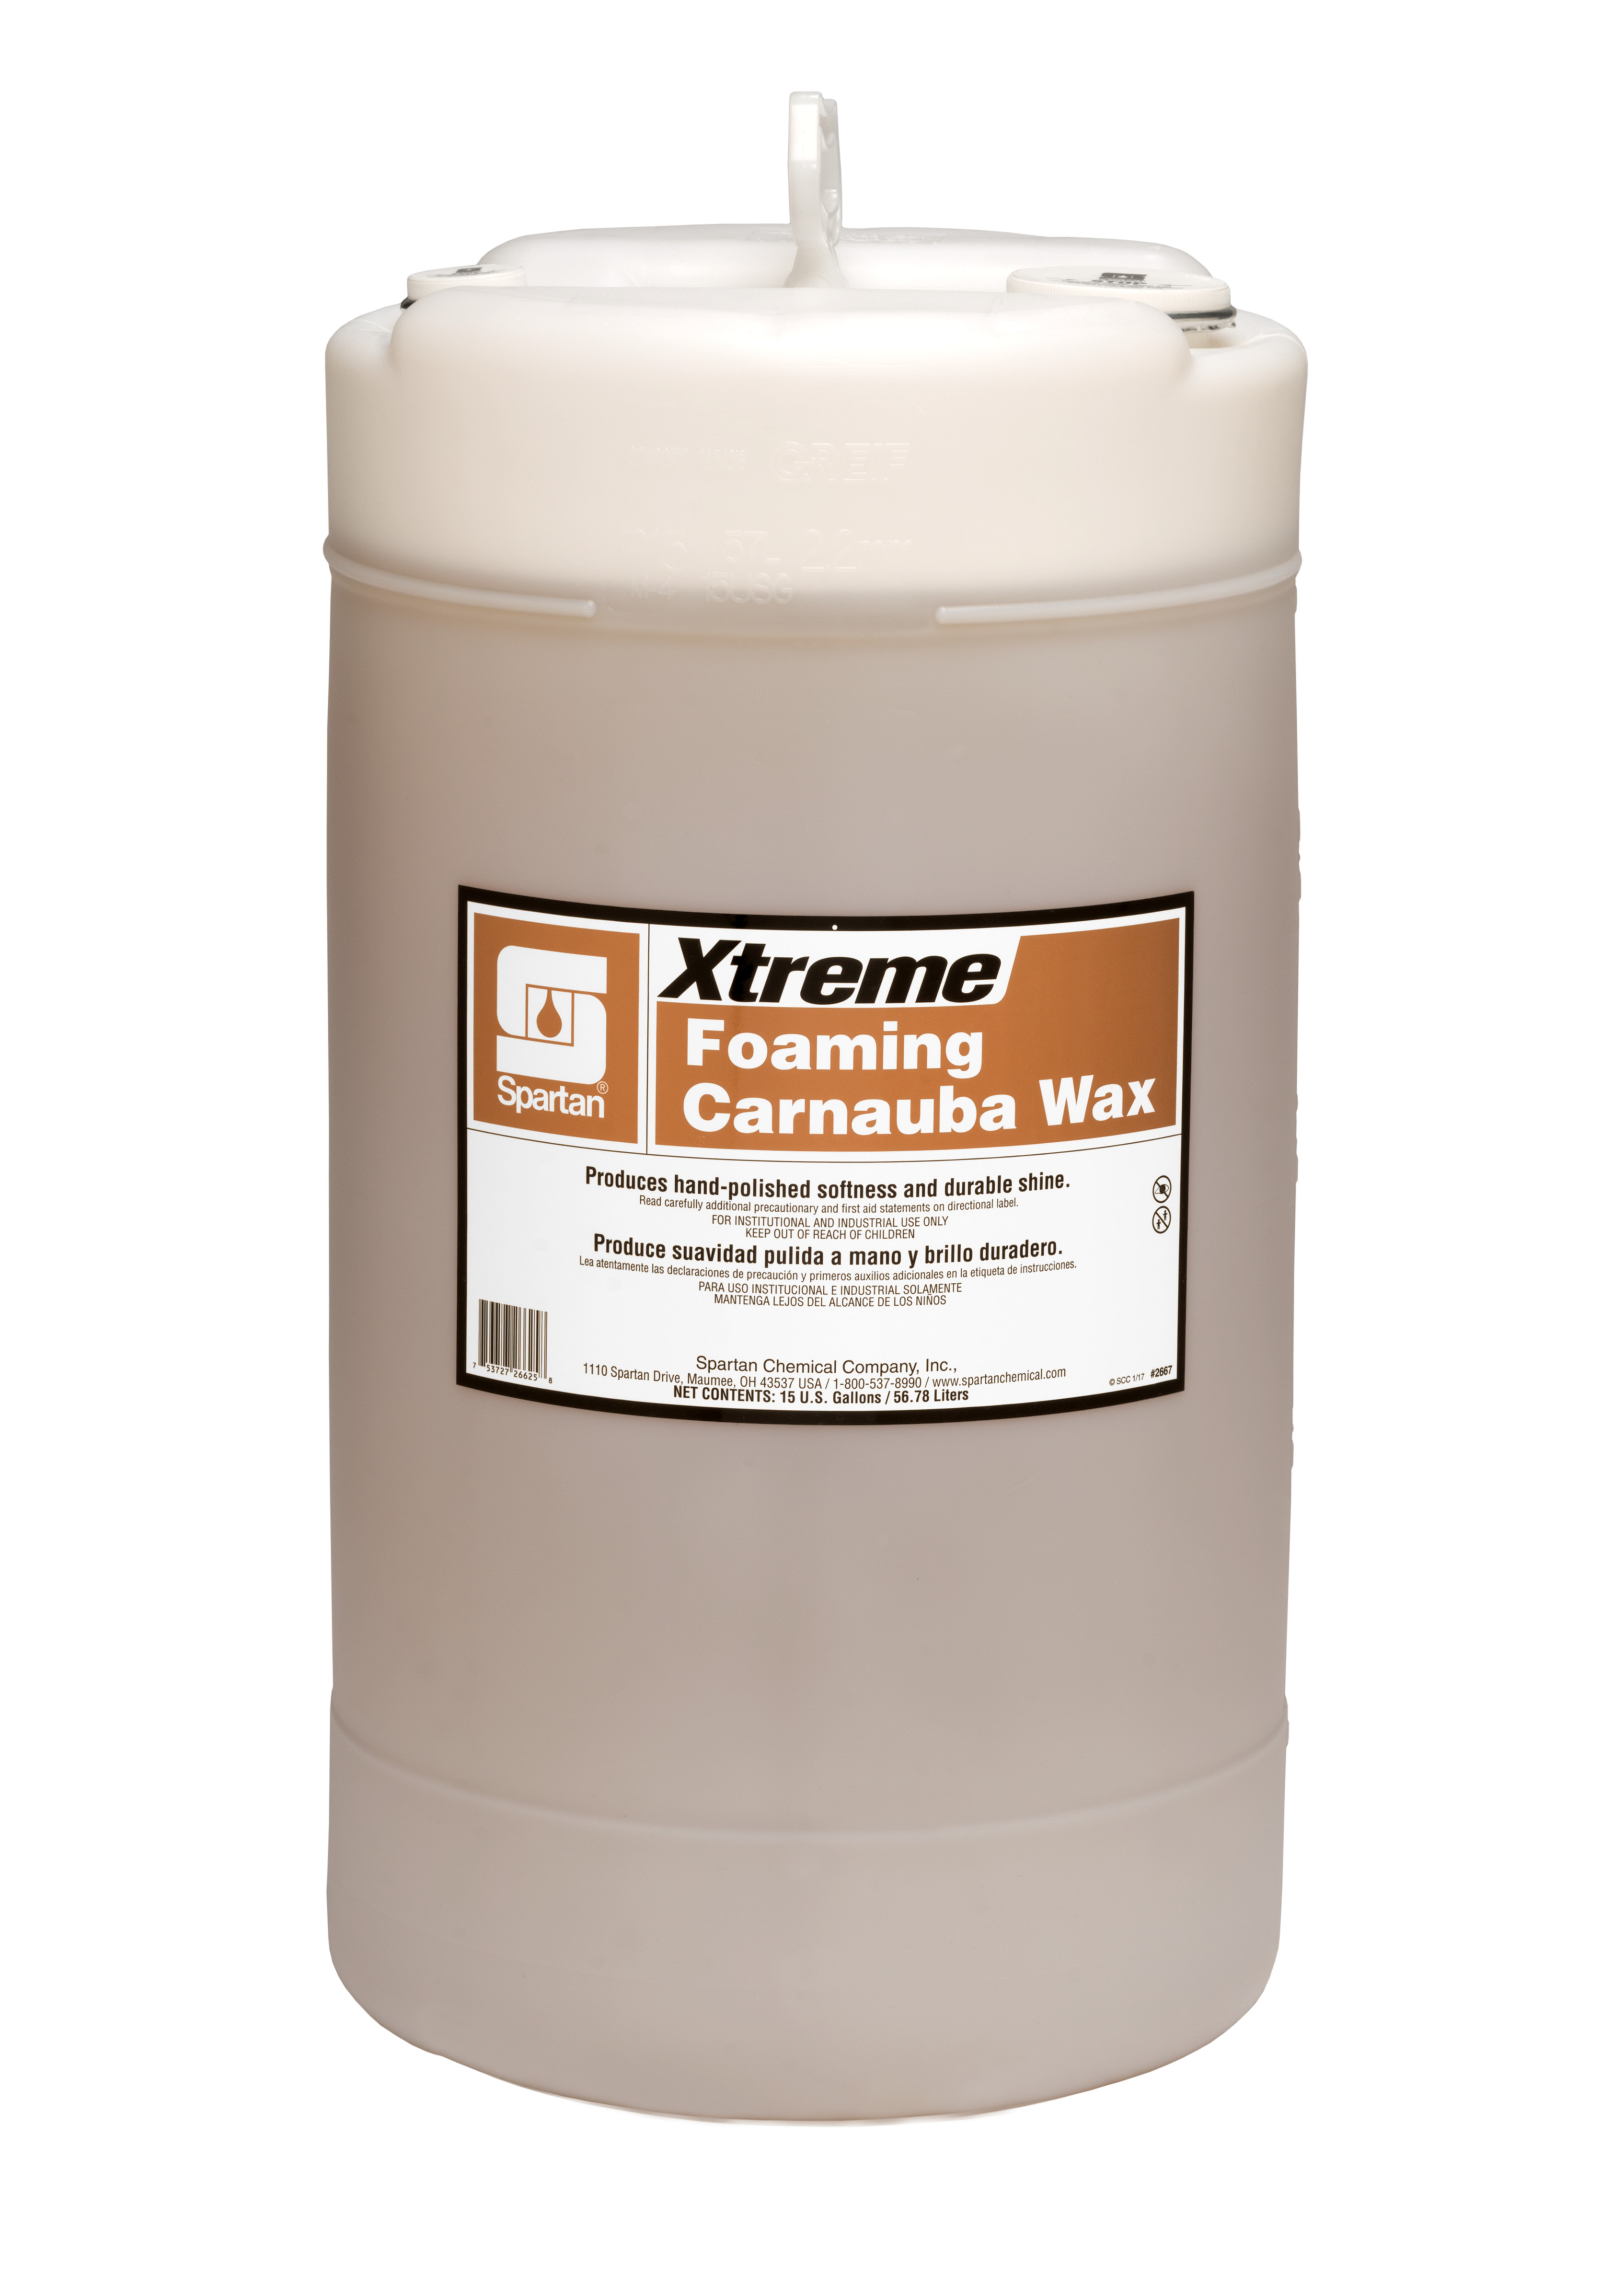 Spartan Chemical Company Xtreme Foaming Carnauba Wax, 15 GAL DRUM